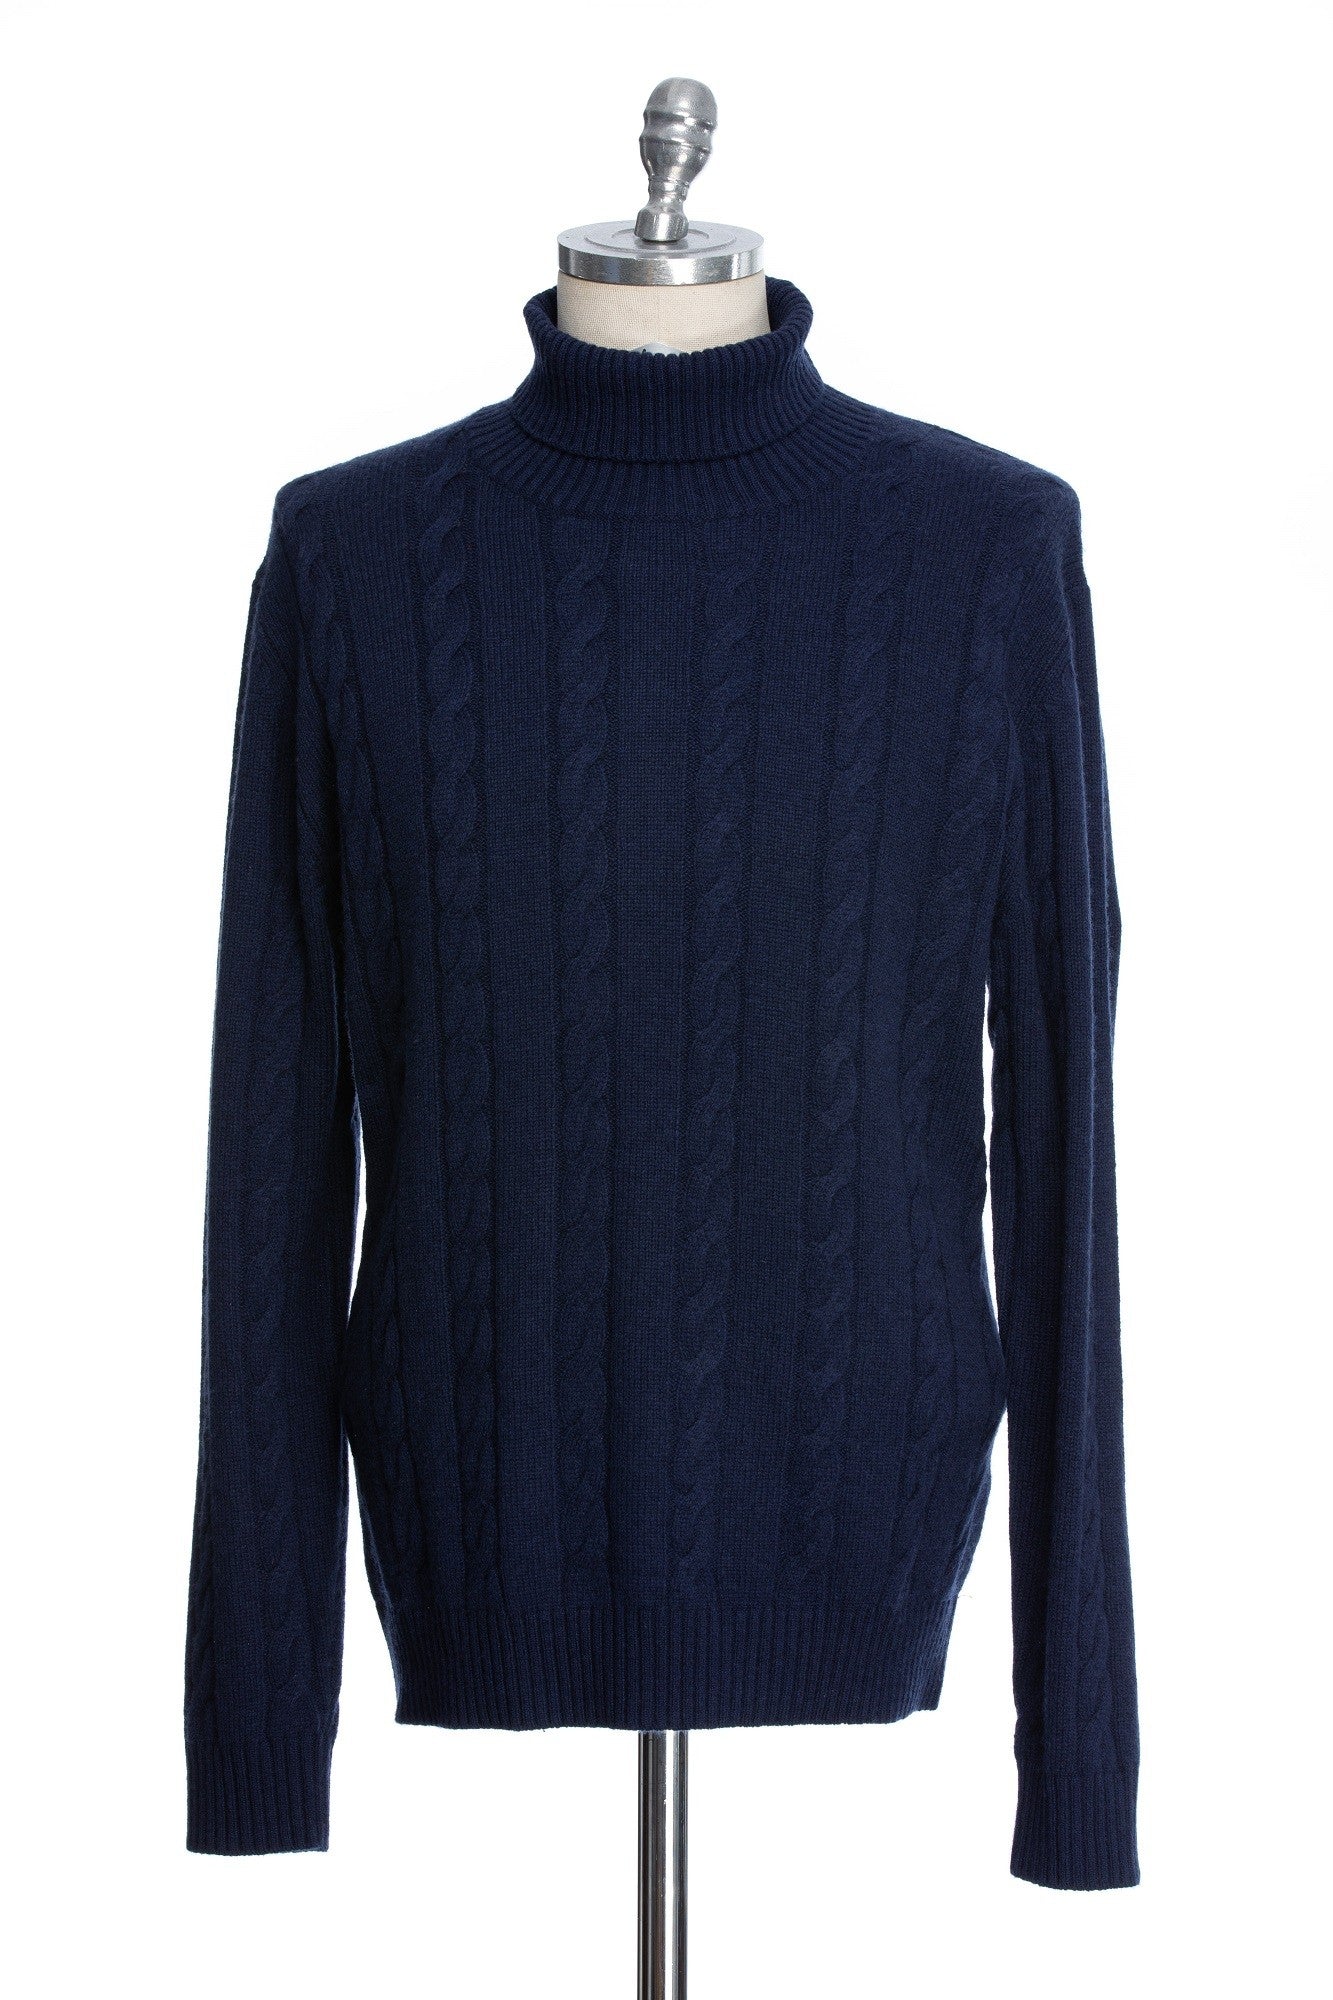 Maglione in lana blu navy